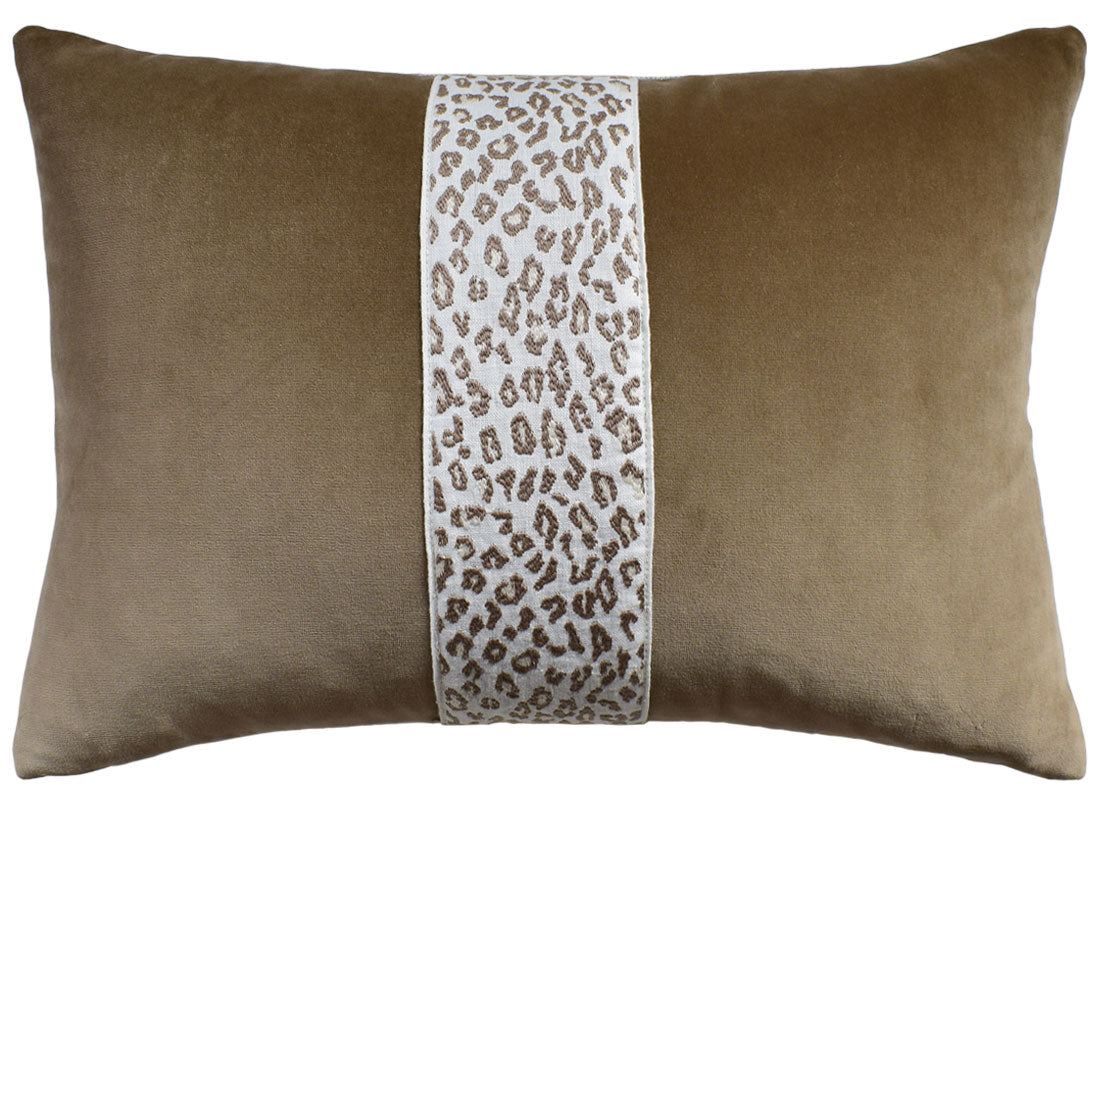 Safari Tape Pillows